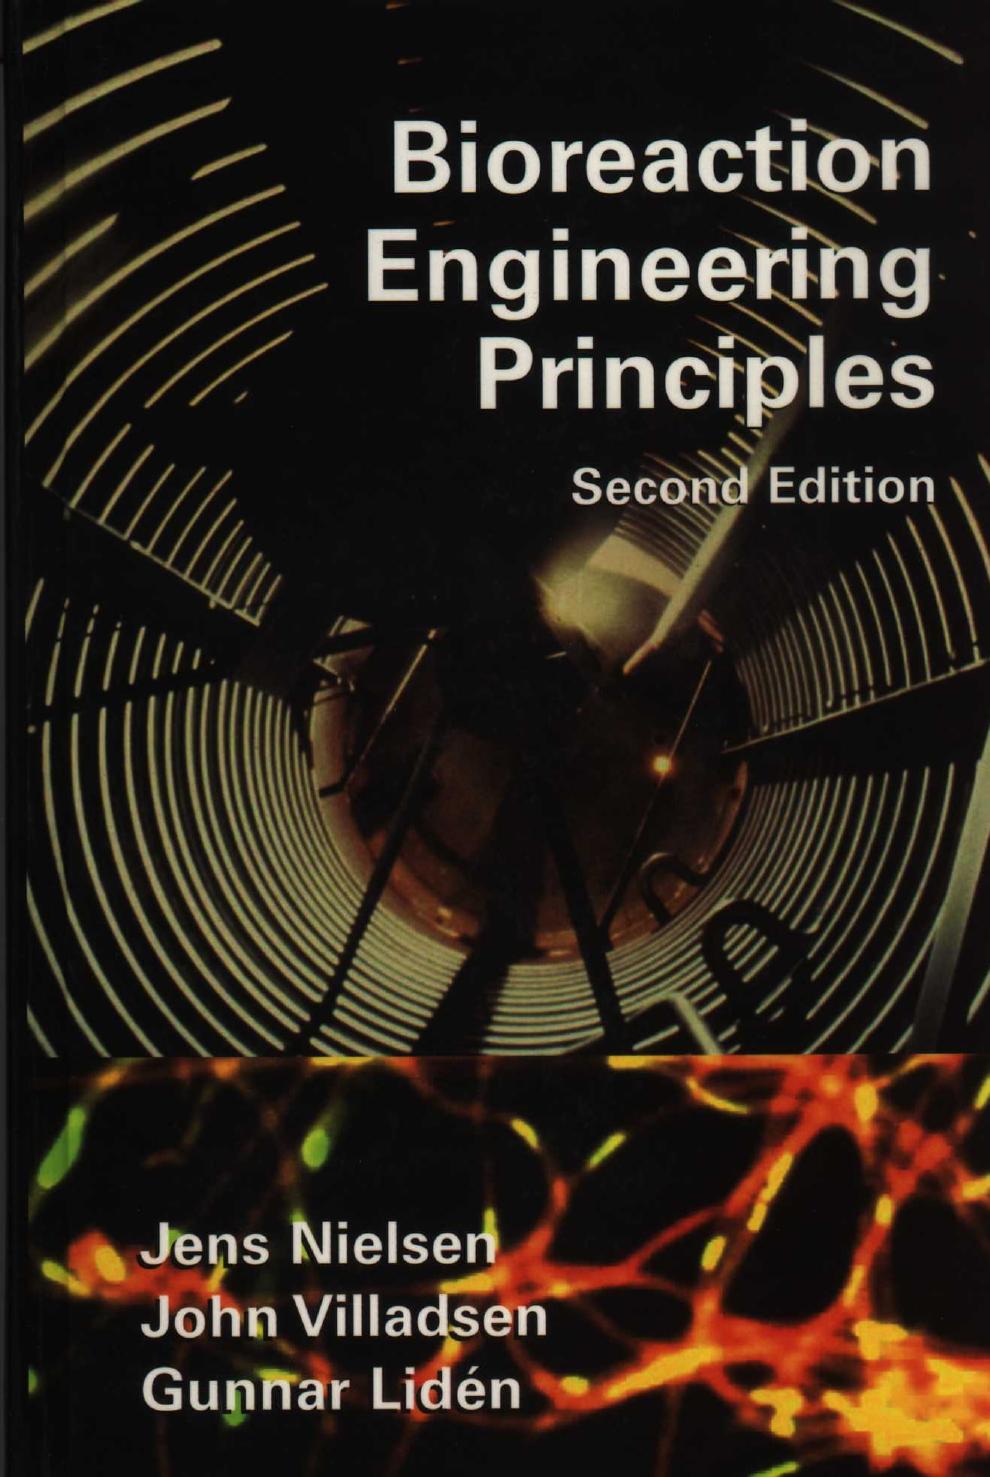 Bioreaction Engineering Principles -2nd ed 2003